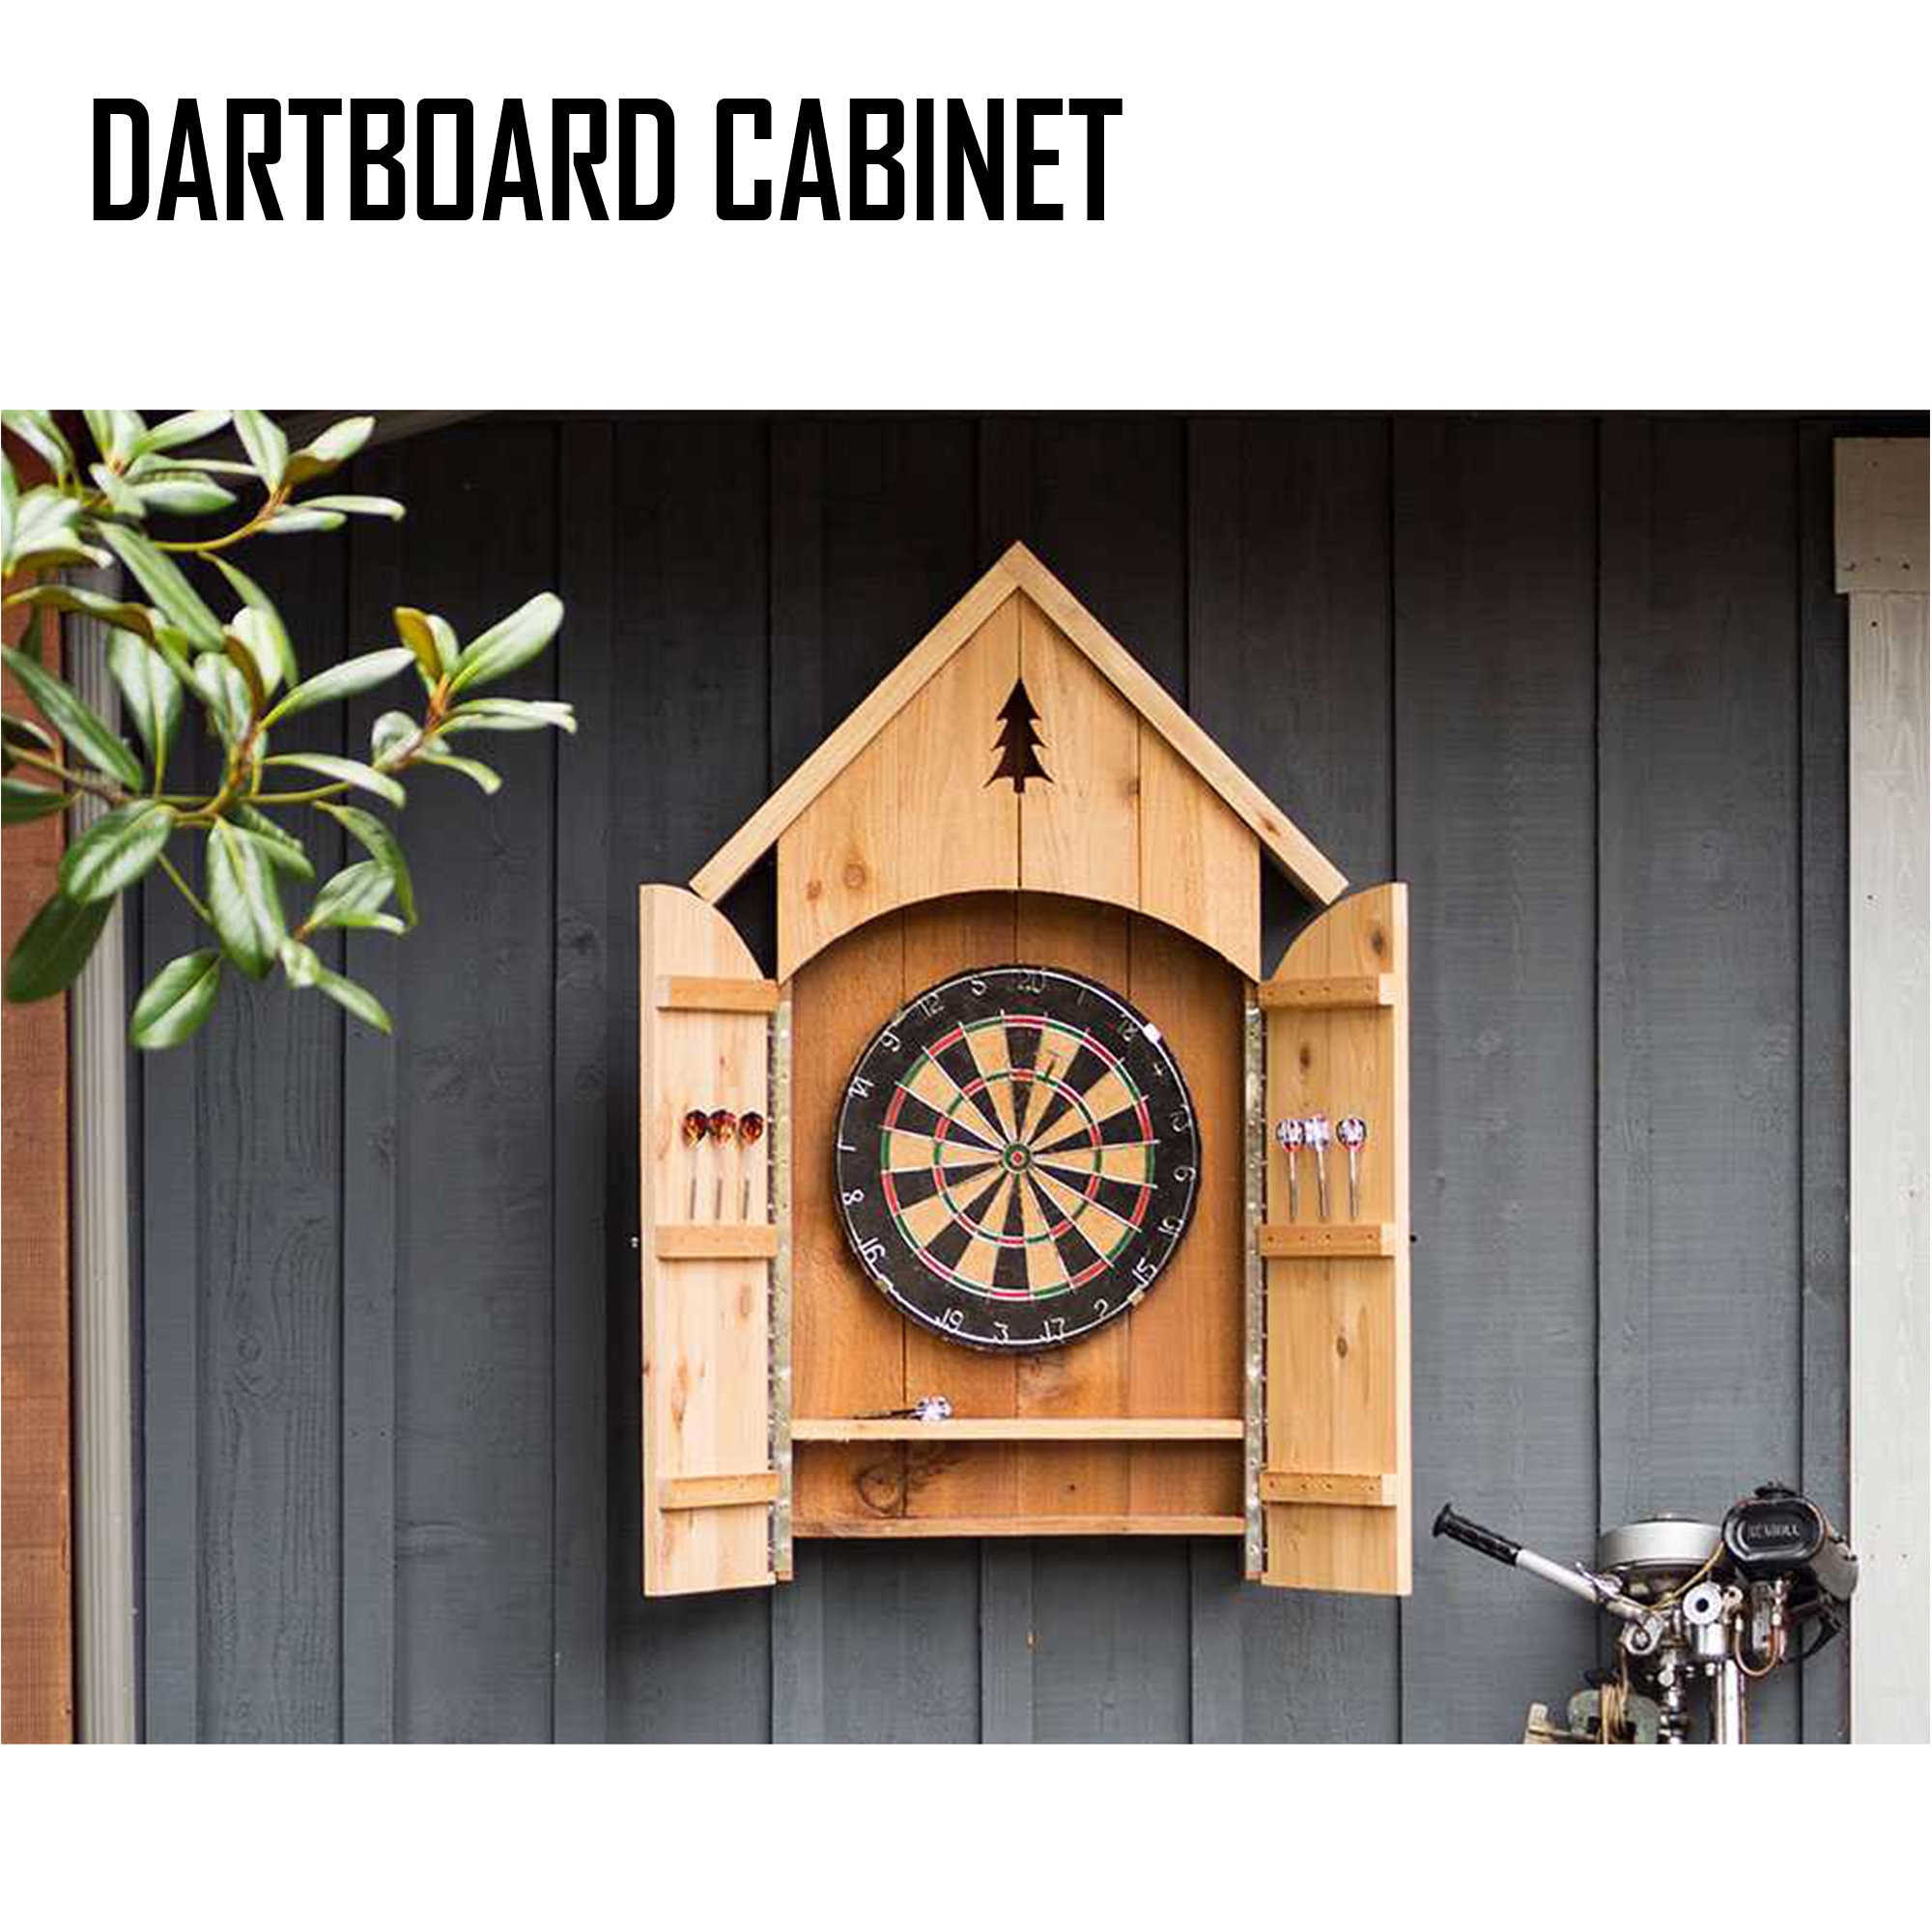 DIY Dartboard Cabinet Plans Wood Dart Board Plans 